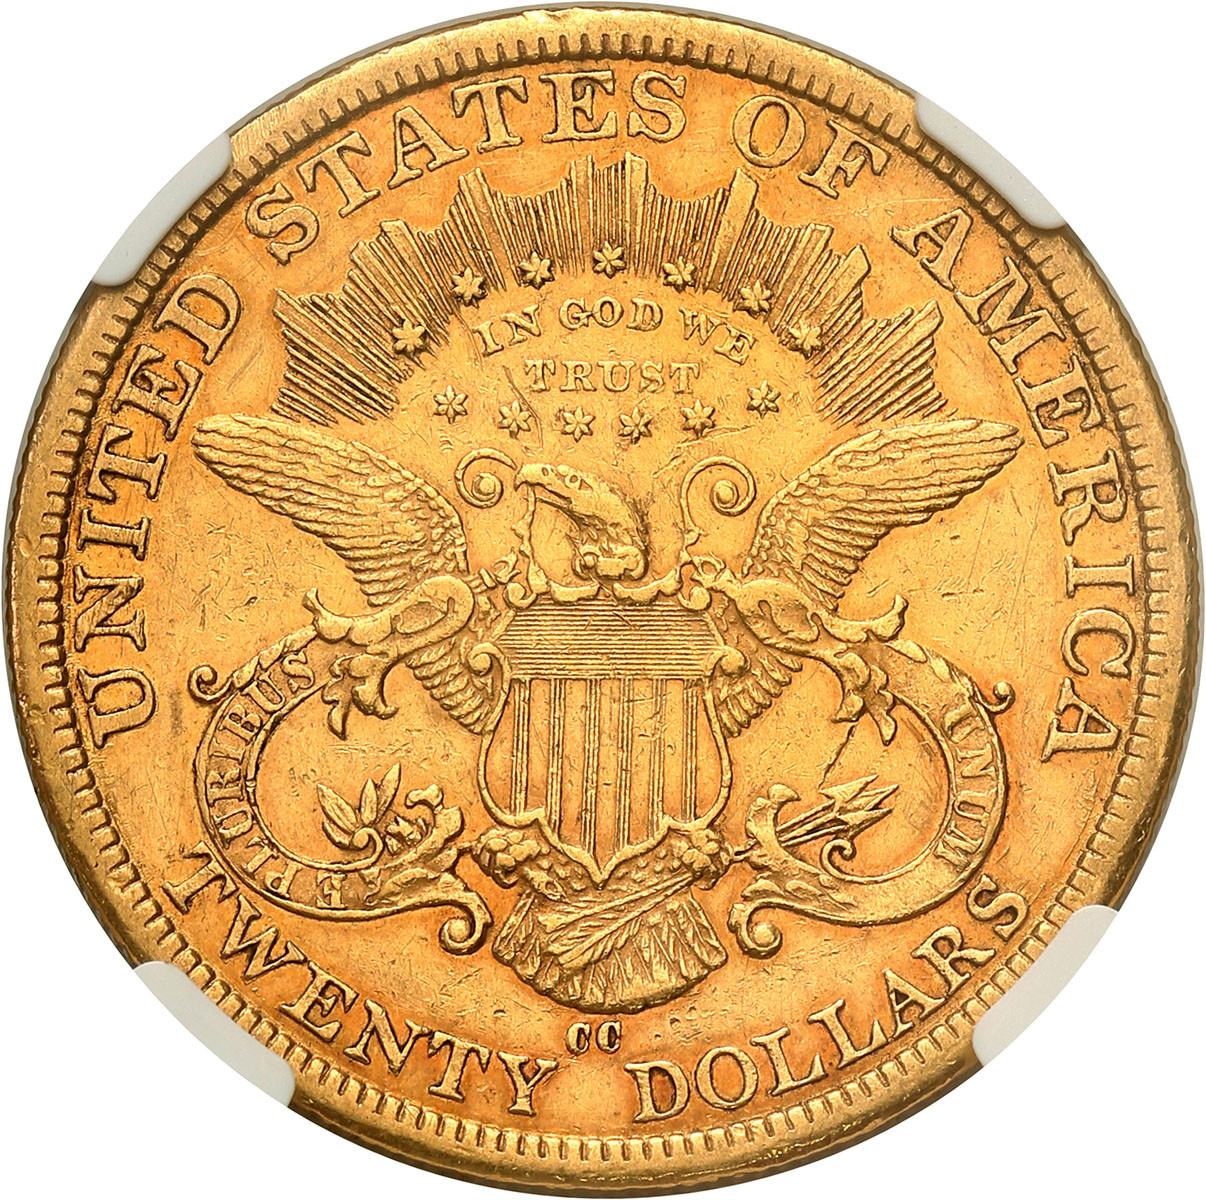 USA. 20 dolarów 1877 CC, Carson City, NGC AU - nakład 42.565 sztuk - RZADKIE